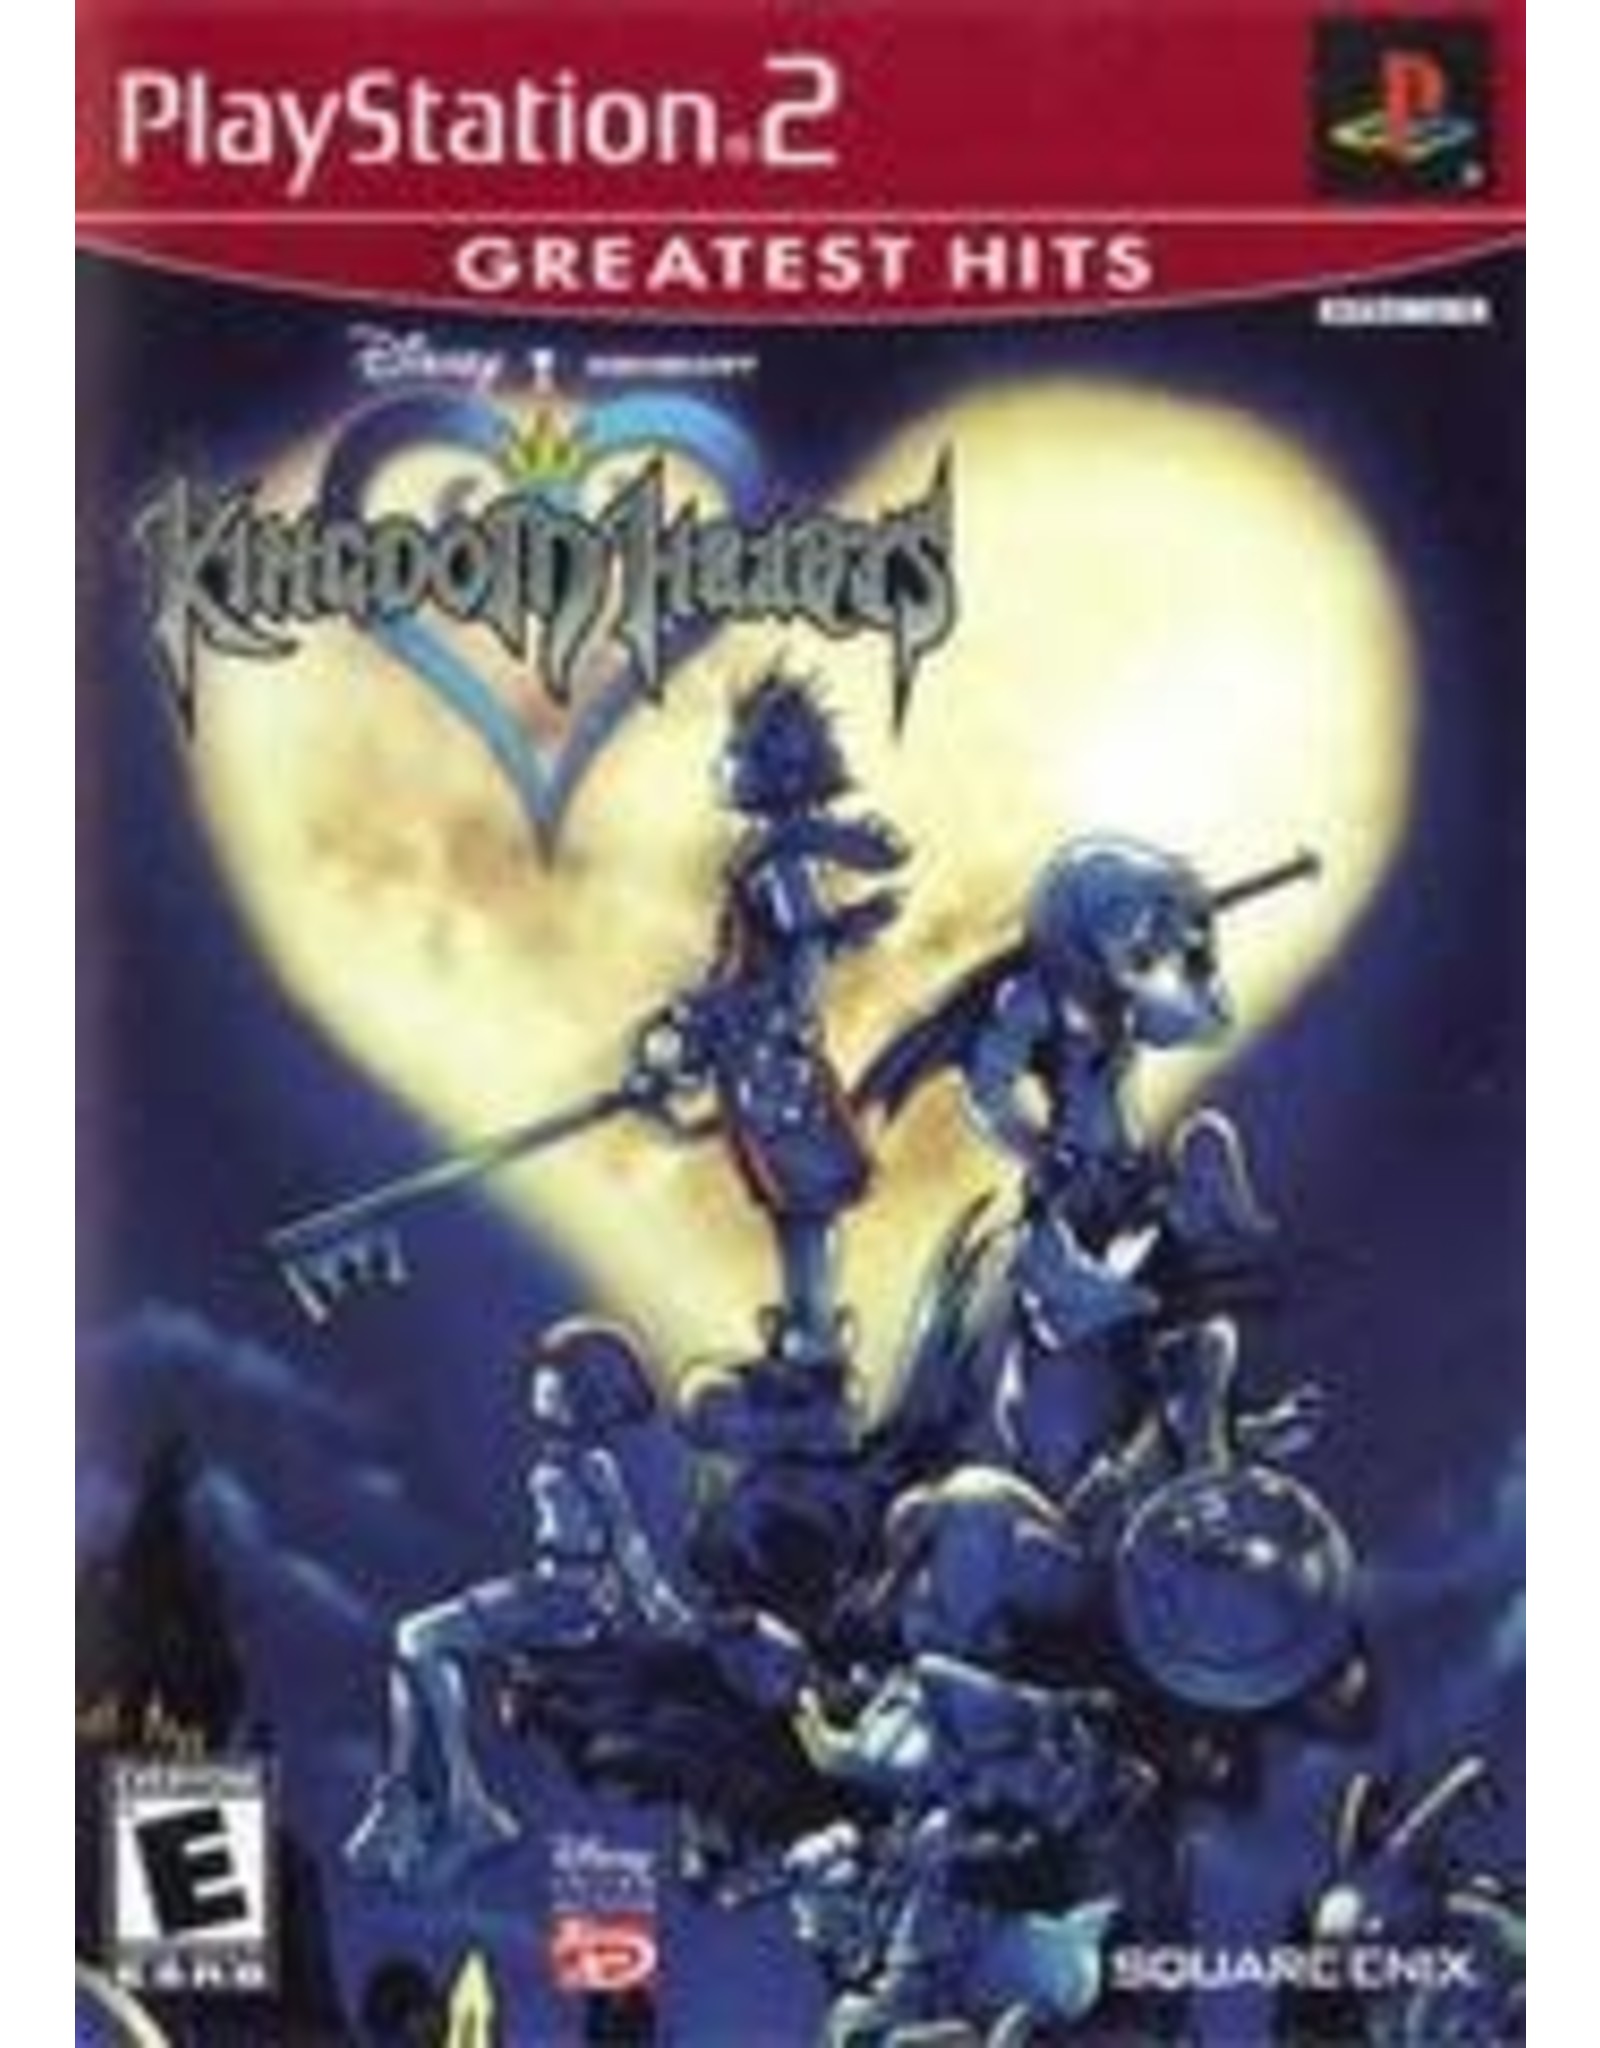 Playstation 2 Kingdom Hearts (Greatest Hits, No Manual)